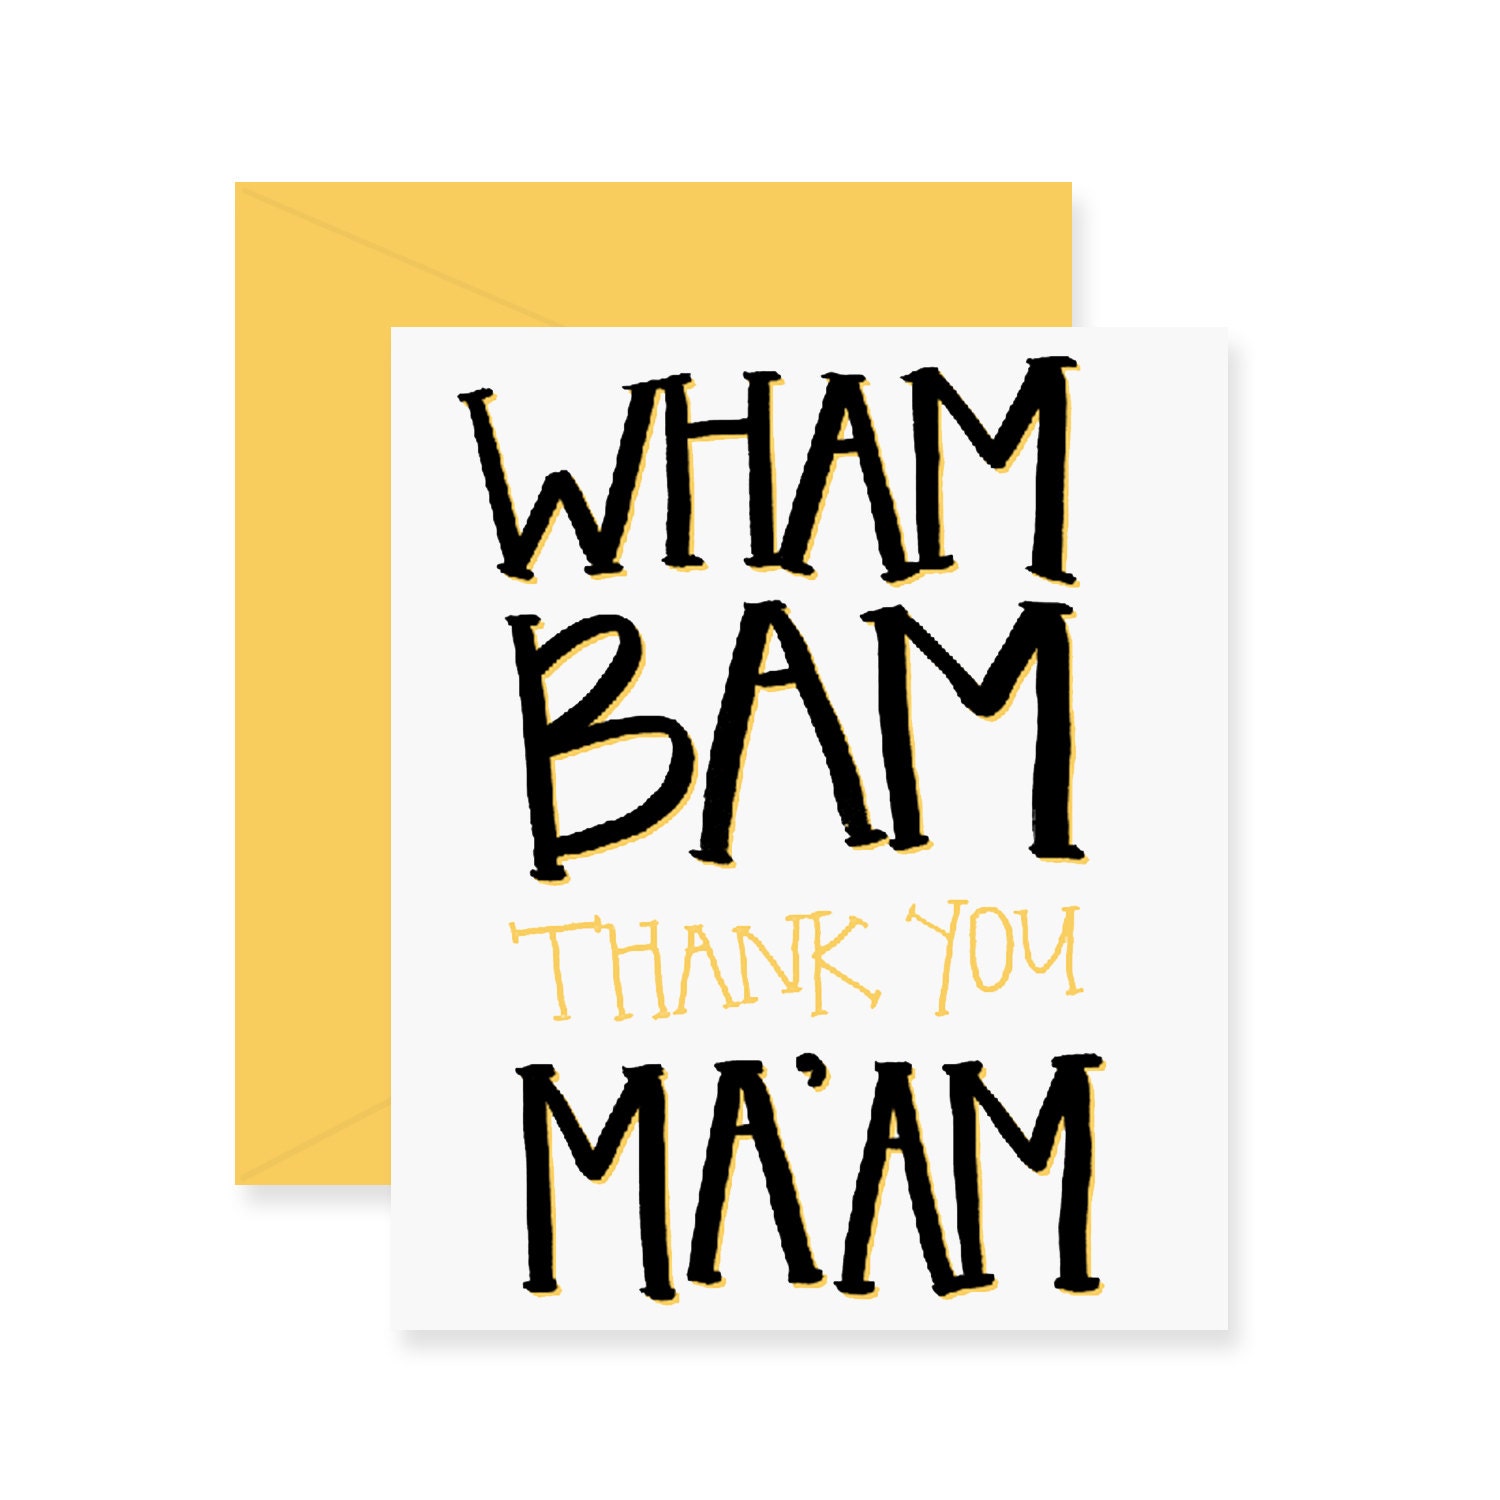 Wham Bam Thank You Maam Greeting Card Thanks Card 2422